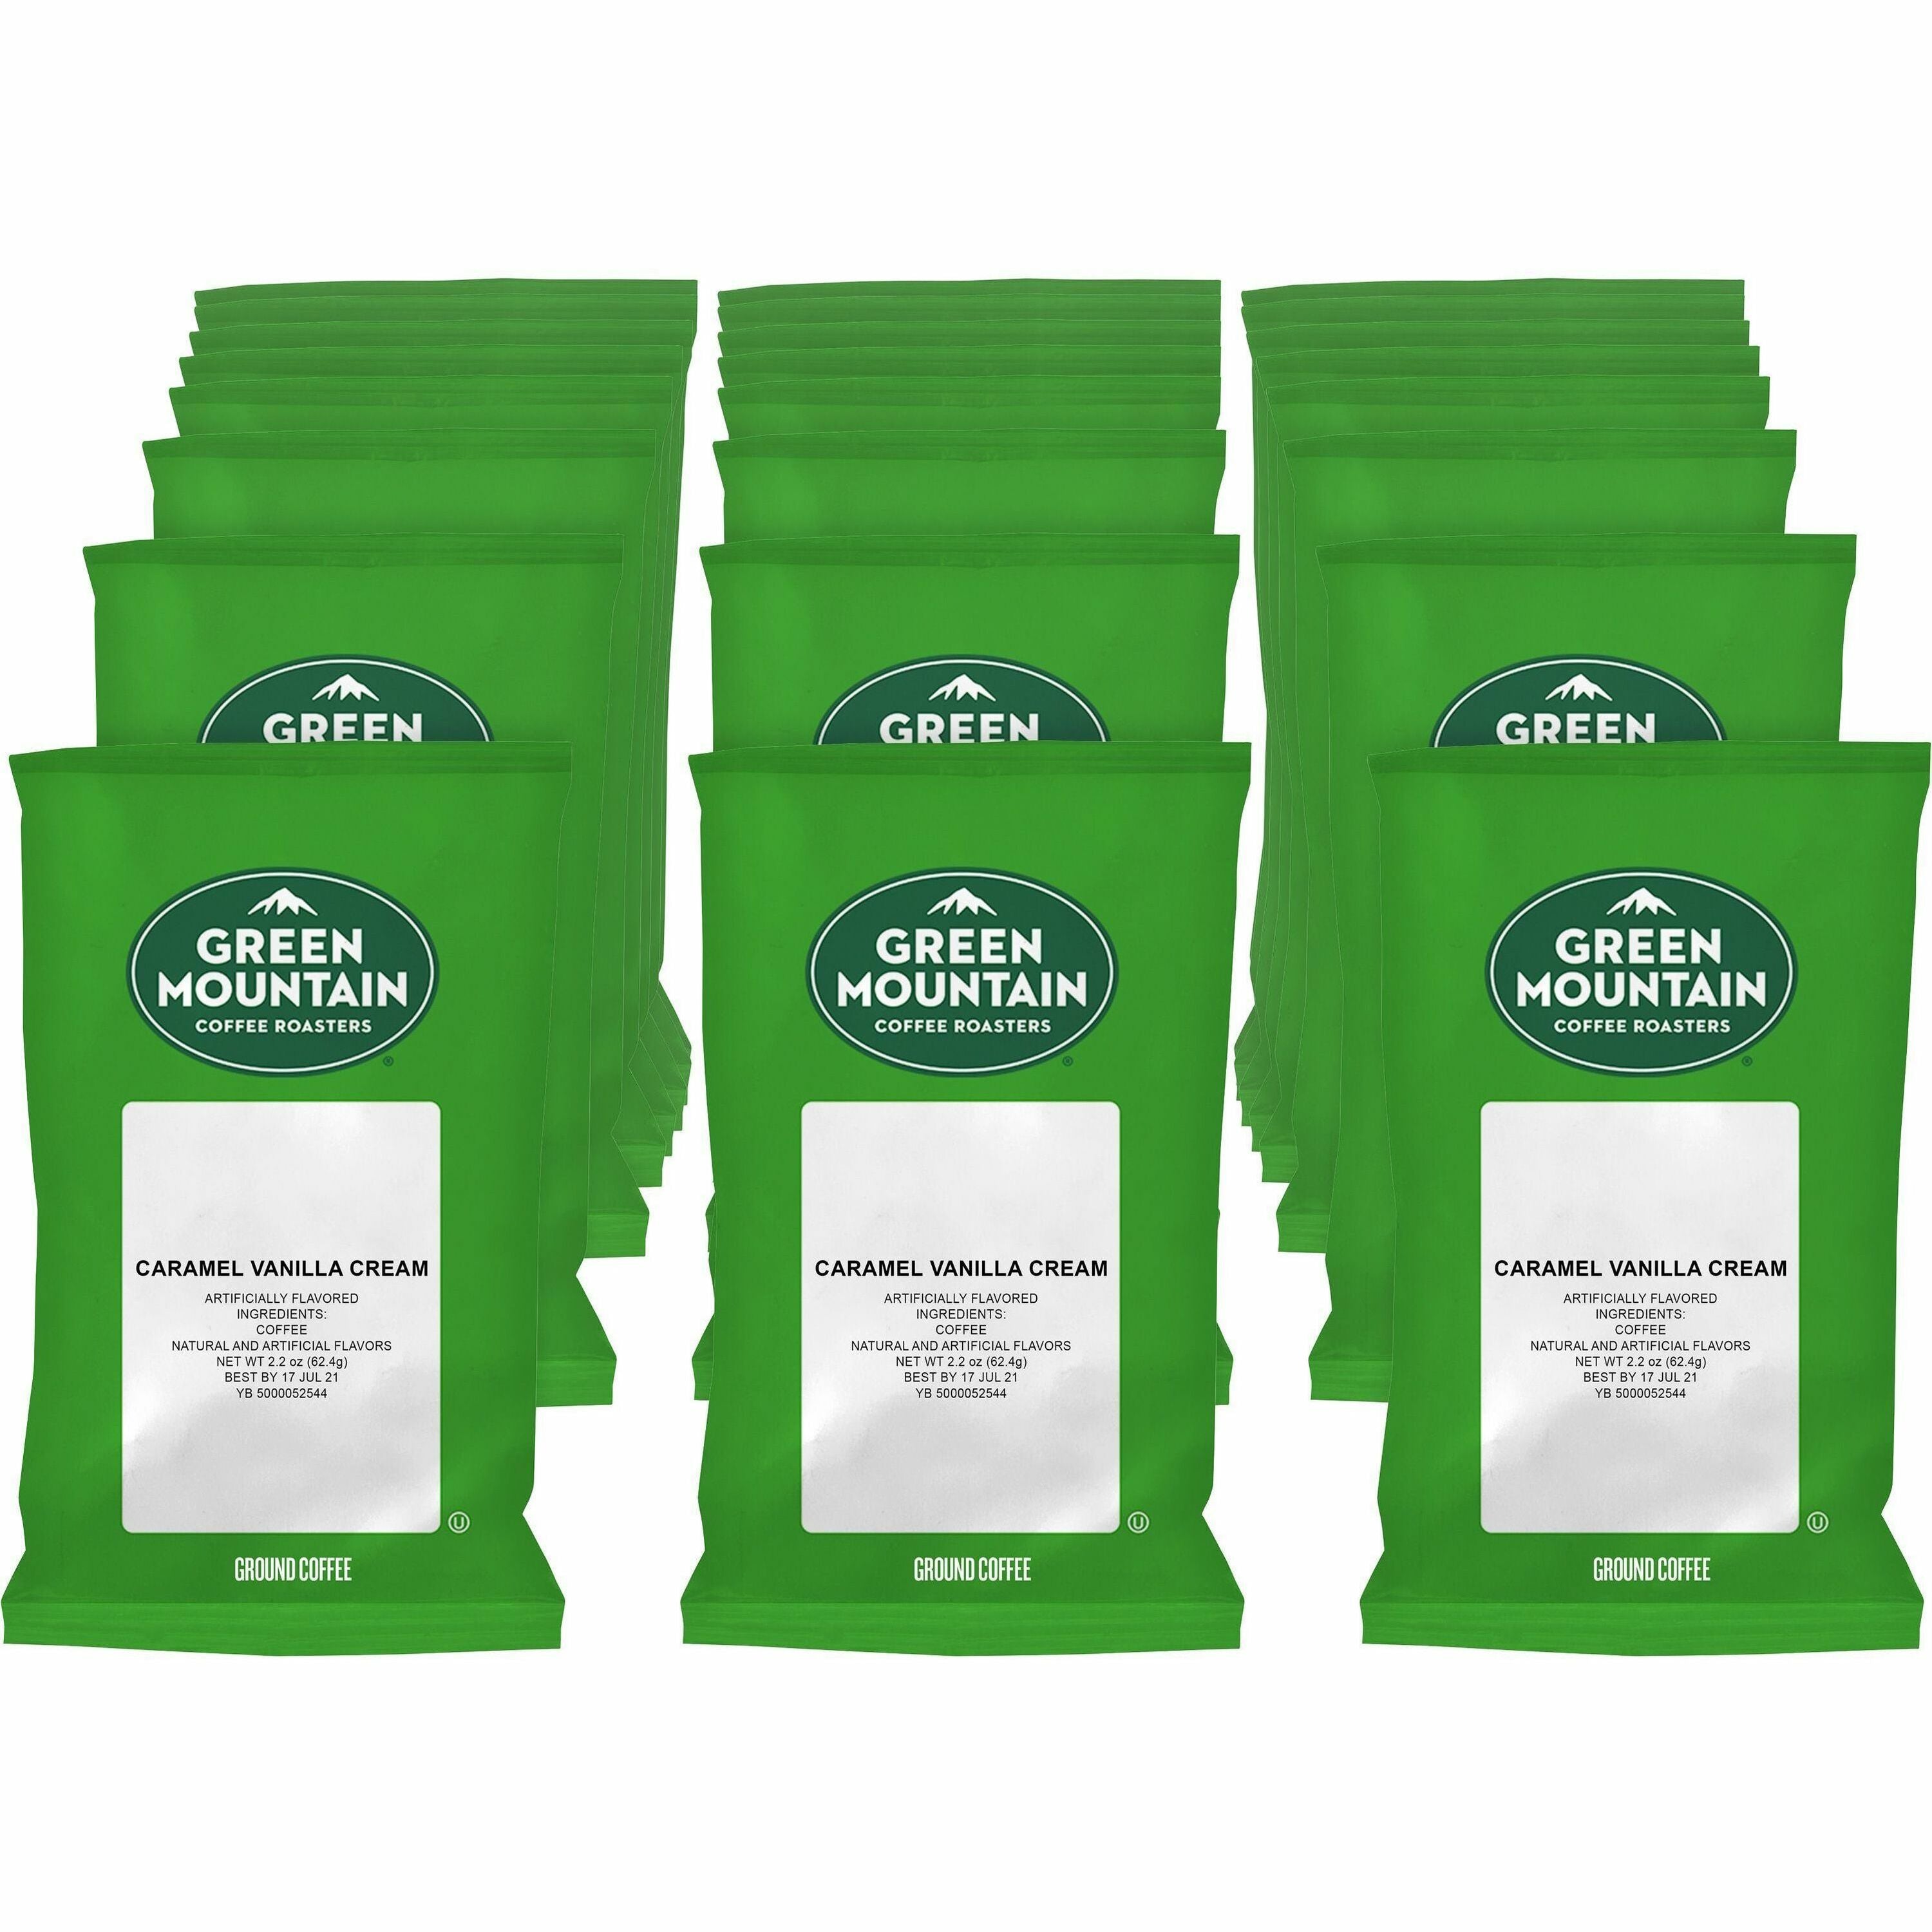 Green Mountain Coffee Roasters Caramel Vanilla Cream Coffee - Light - 2.2 oz - 50 / Carton